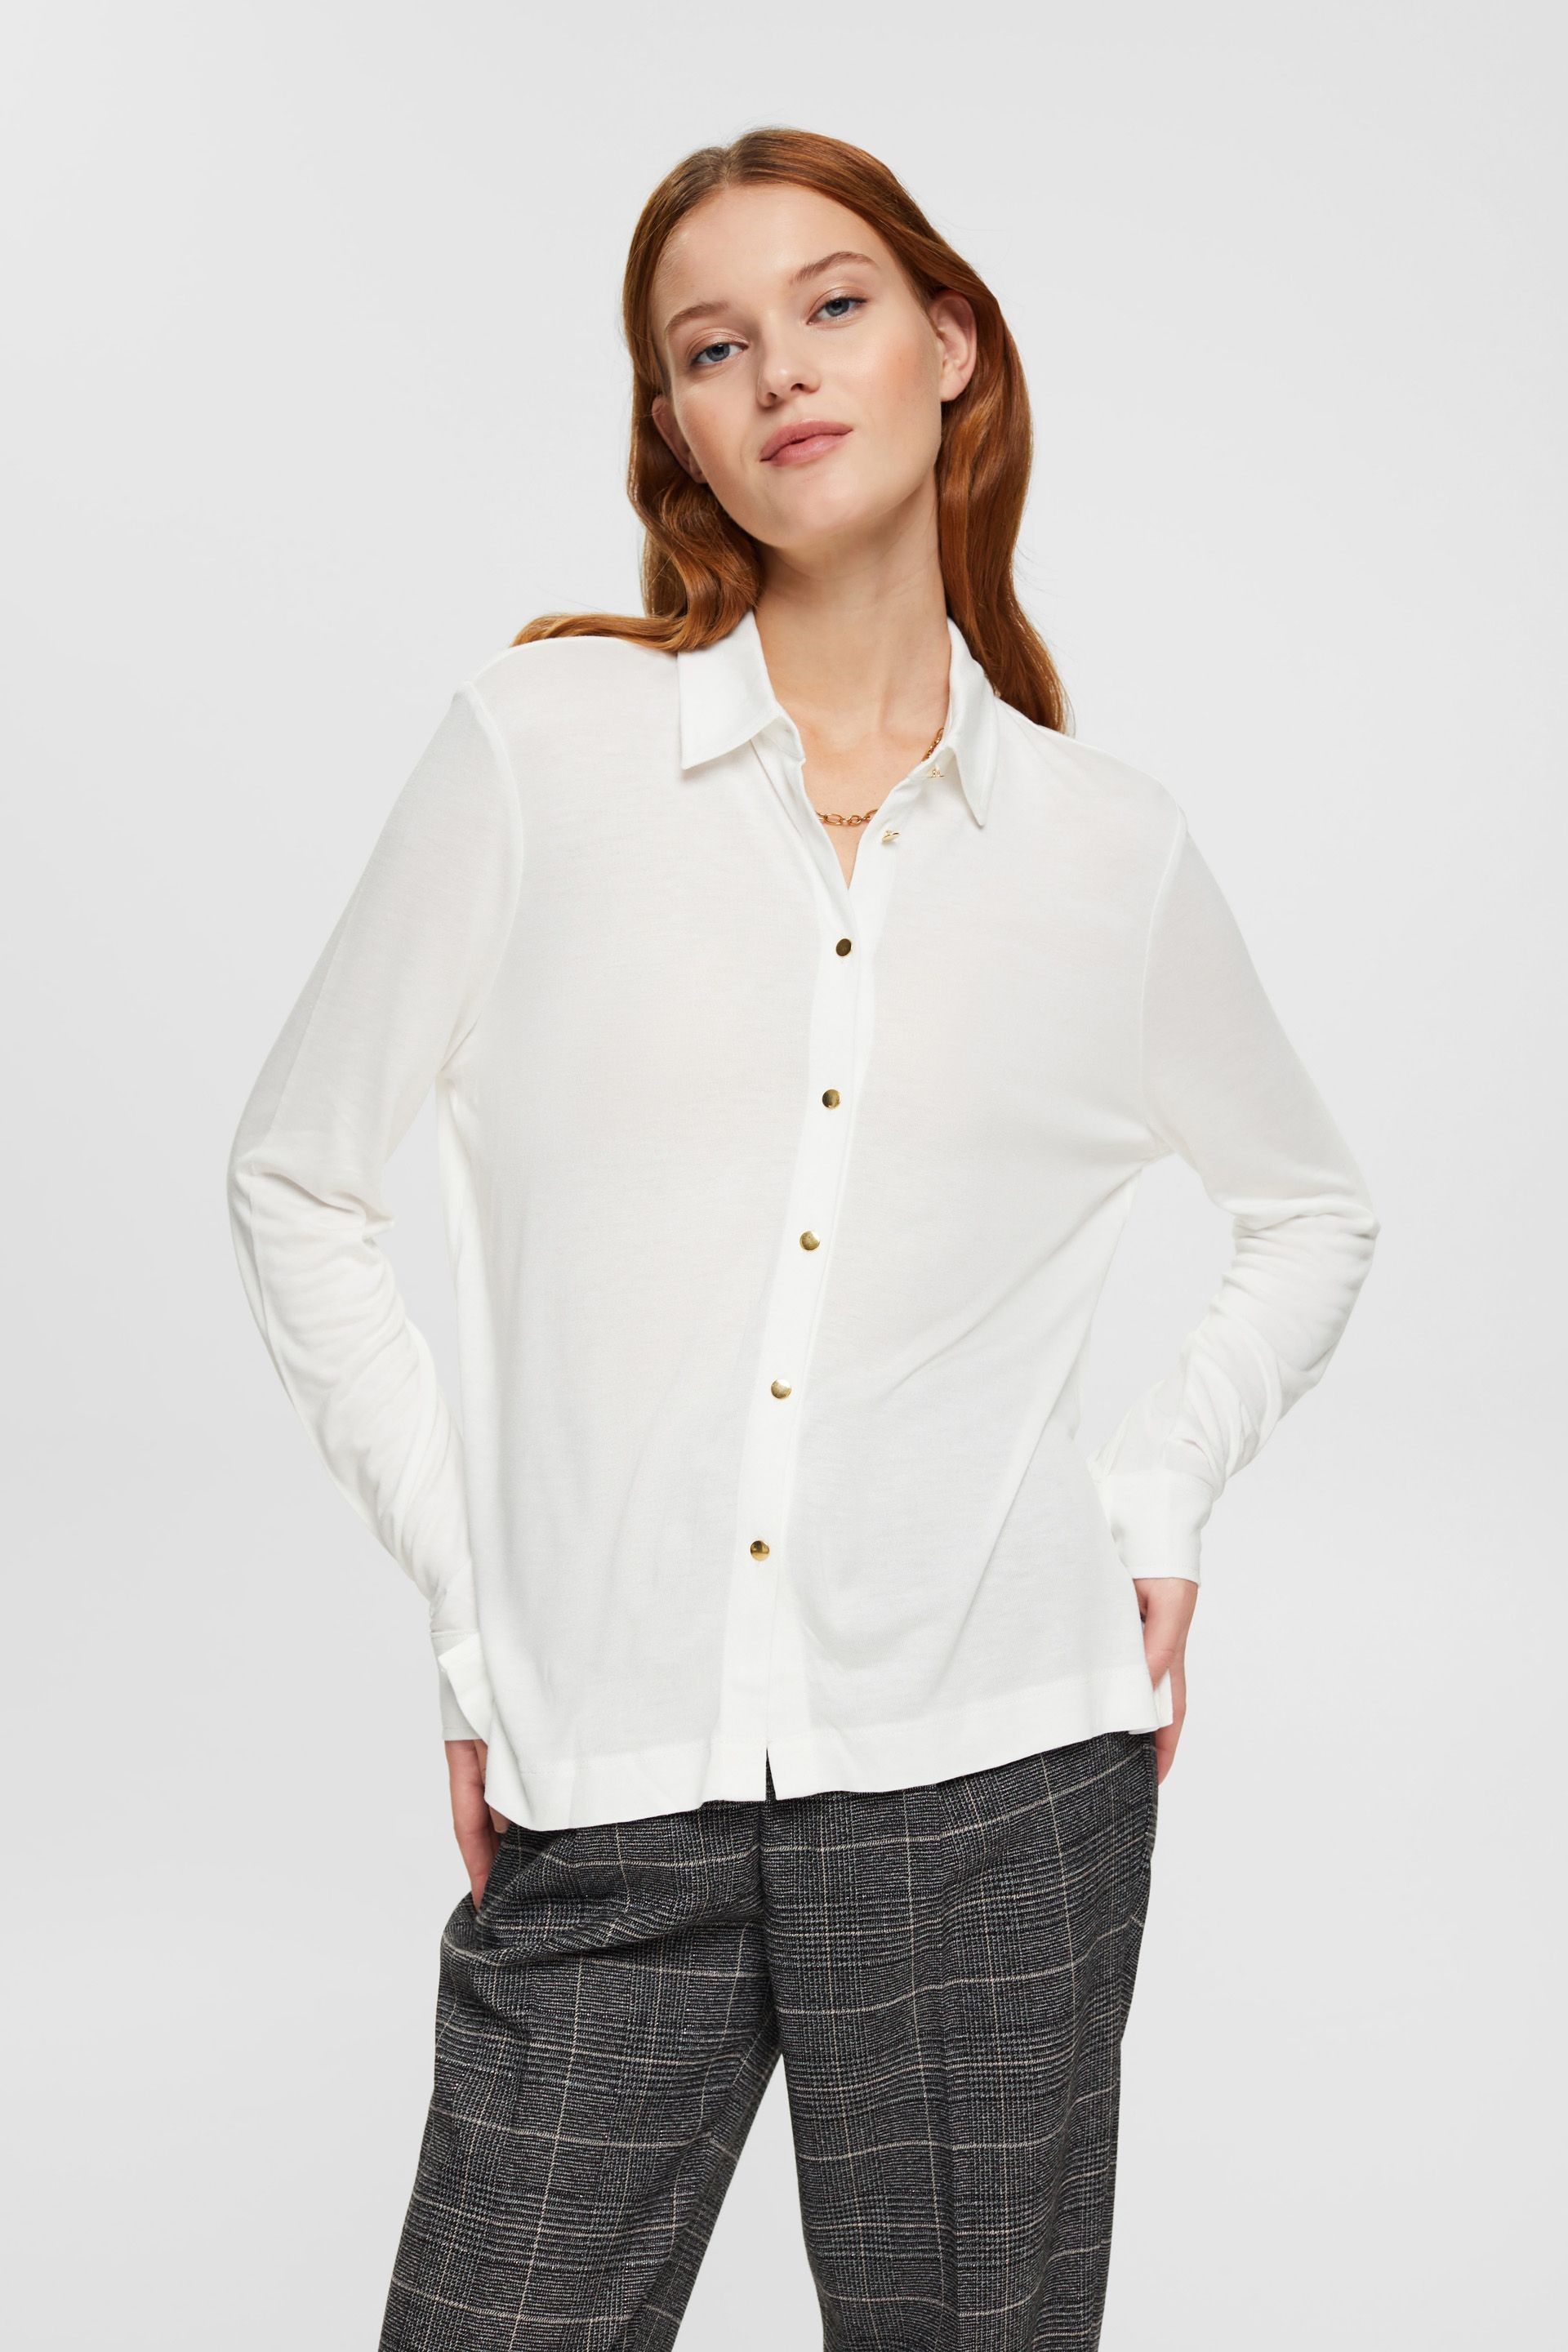 matig formeel Snelkoppelingen Esprit tricot blouse ecru 992EO1K312 110